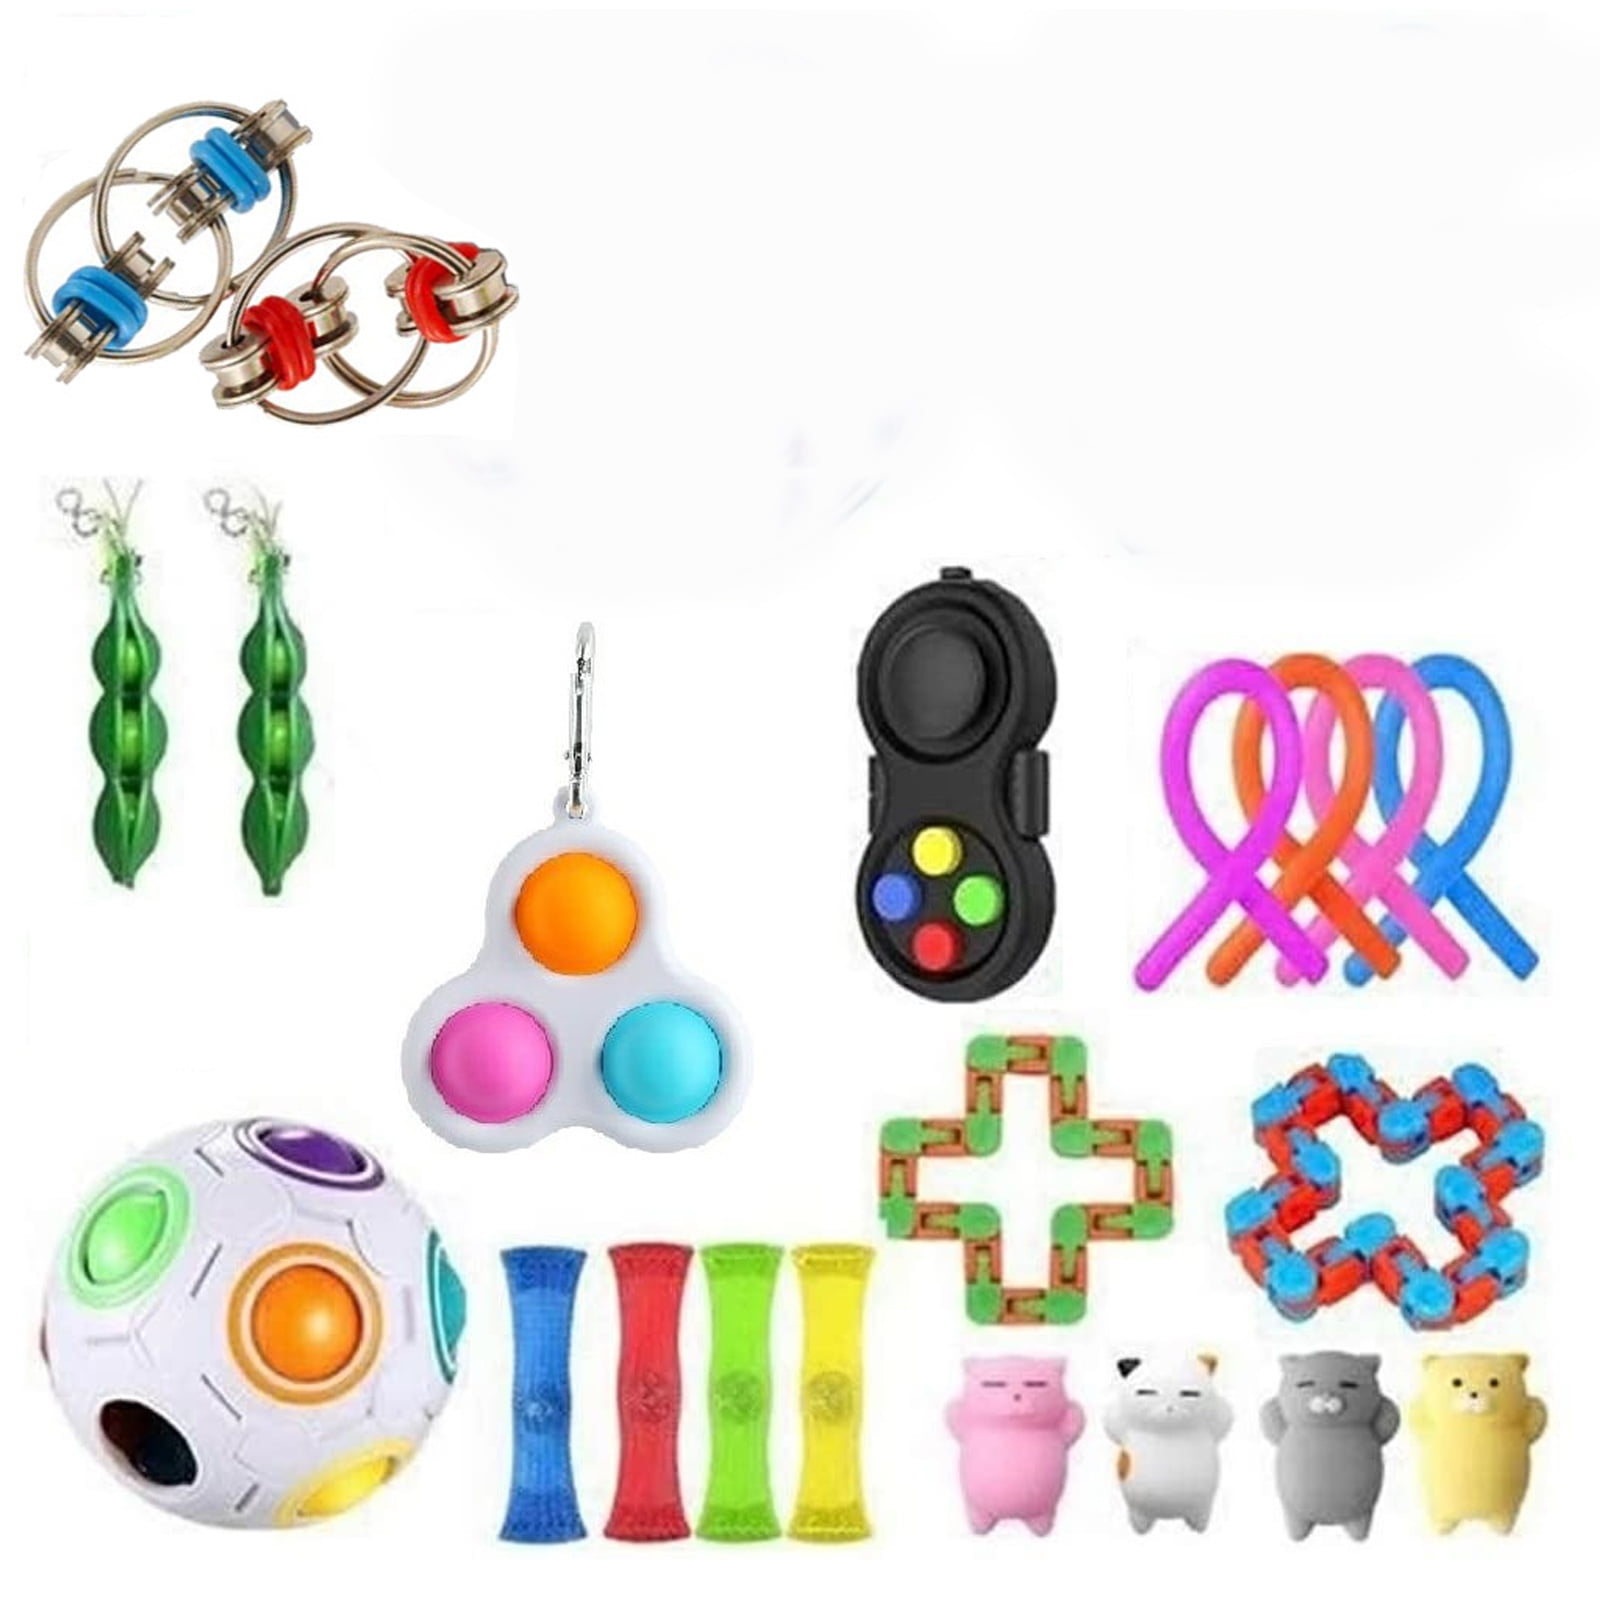 Toys Set Kit Sensory Tools Bundle Stress Relief Hand ADHD Toys Adults Kids X7R4 